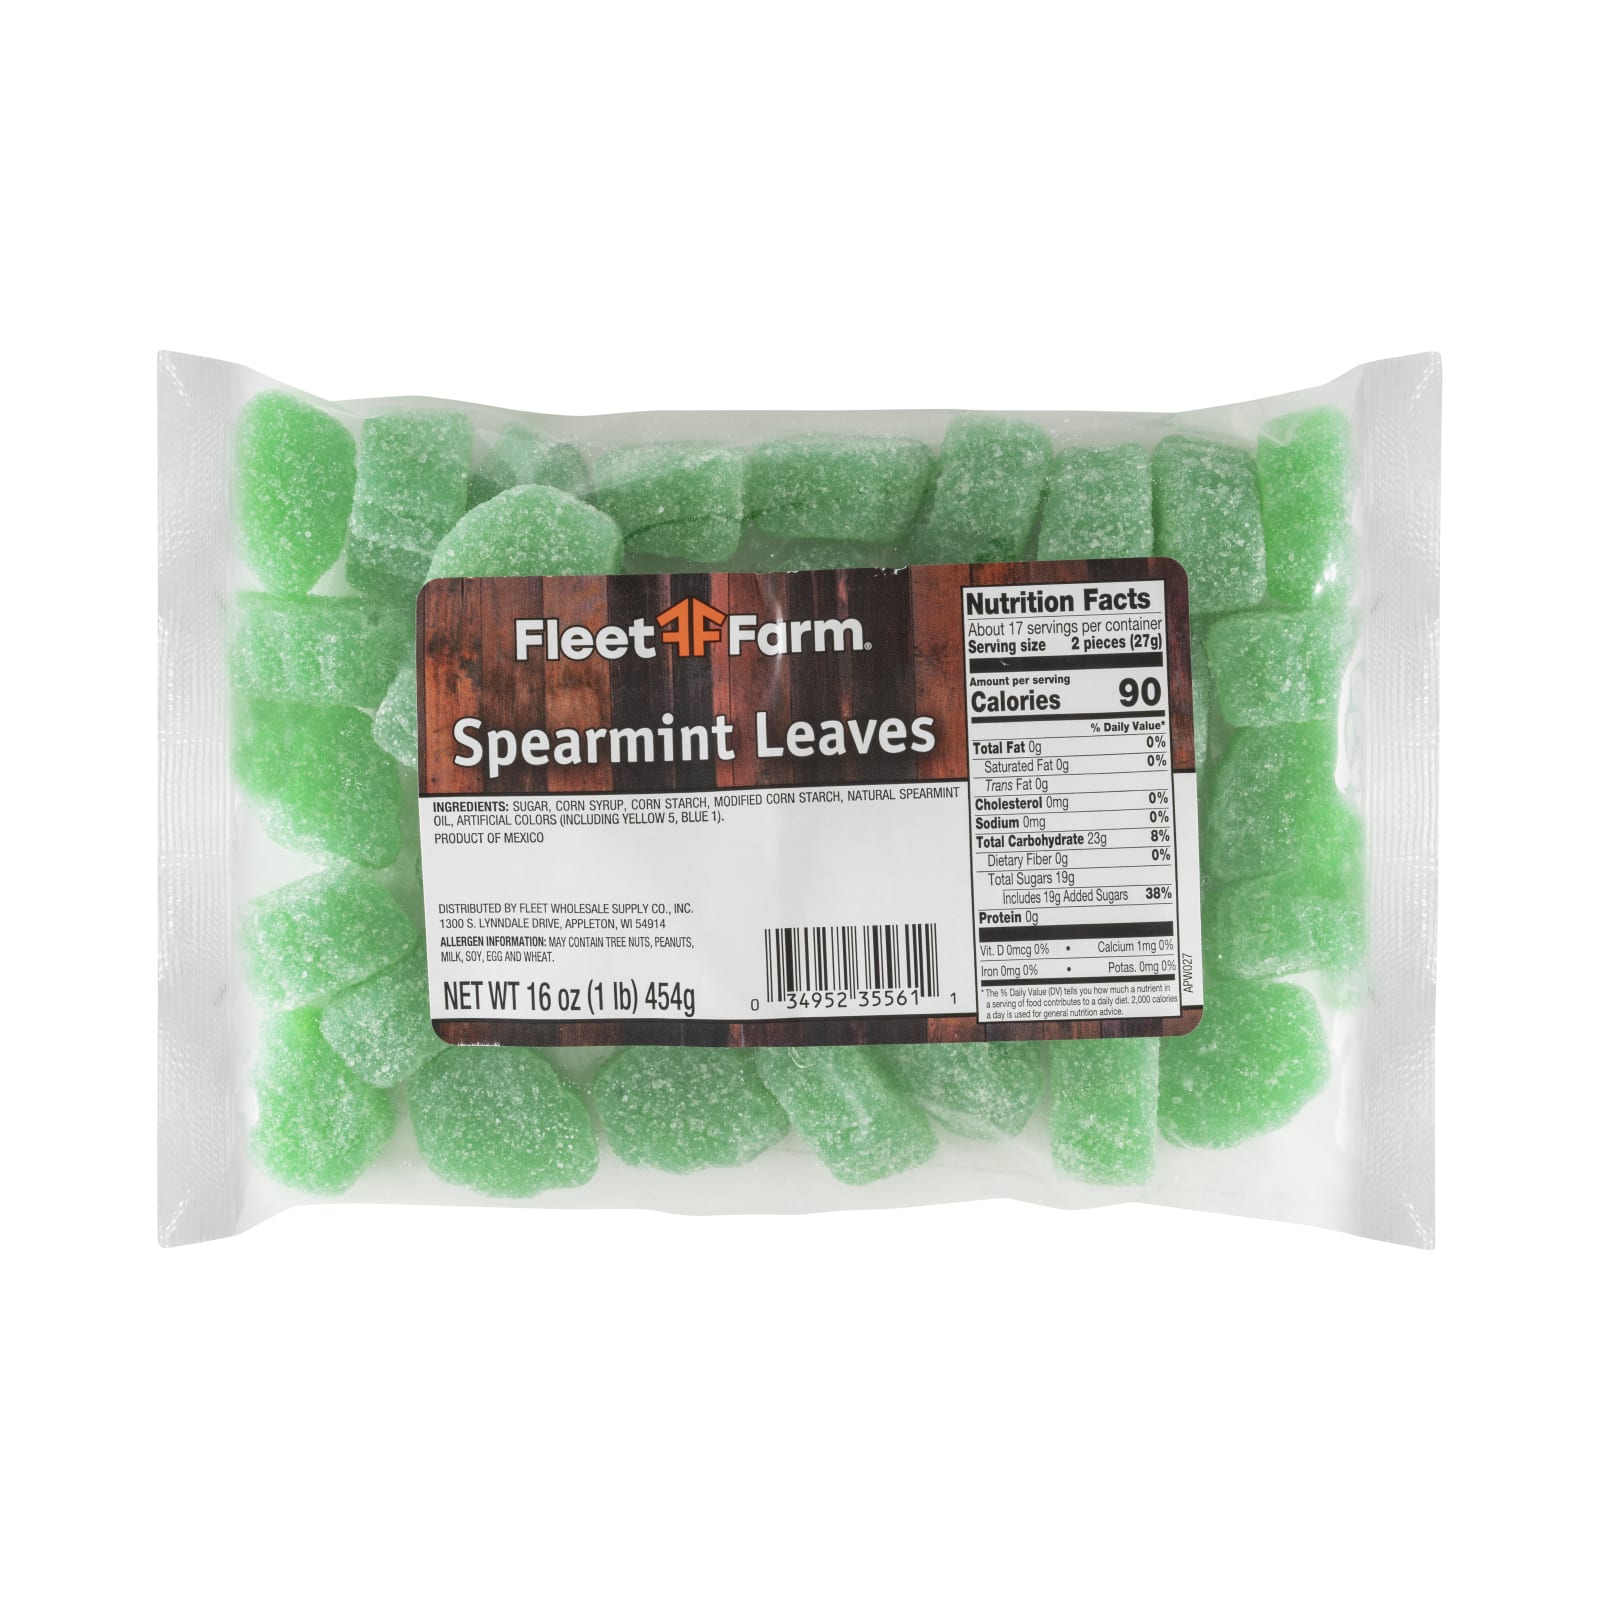 5 Pk. Lawn & Leaf Bags by Fleet Farm at Fleet Farm